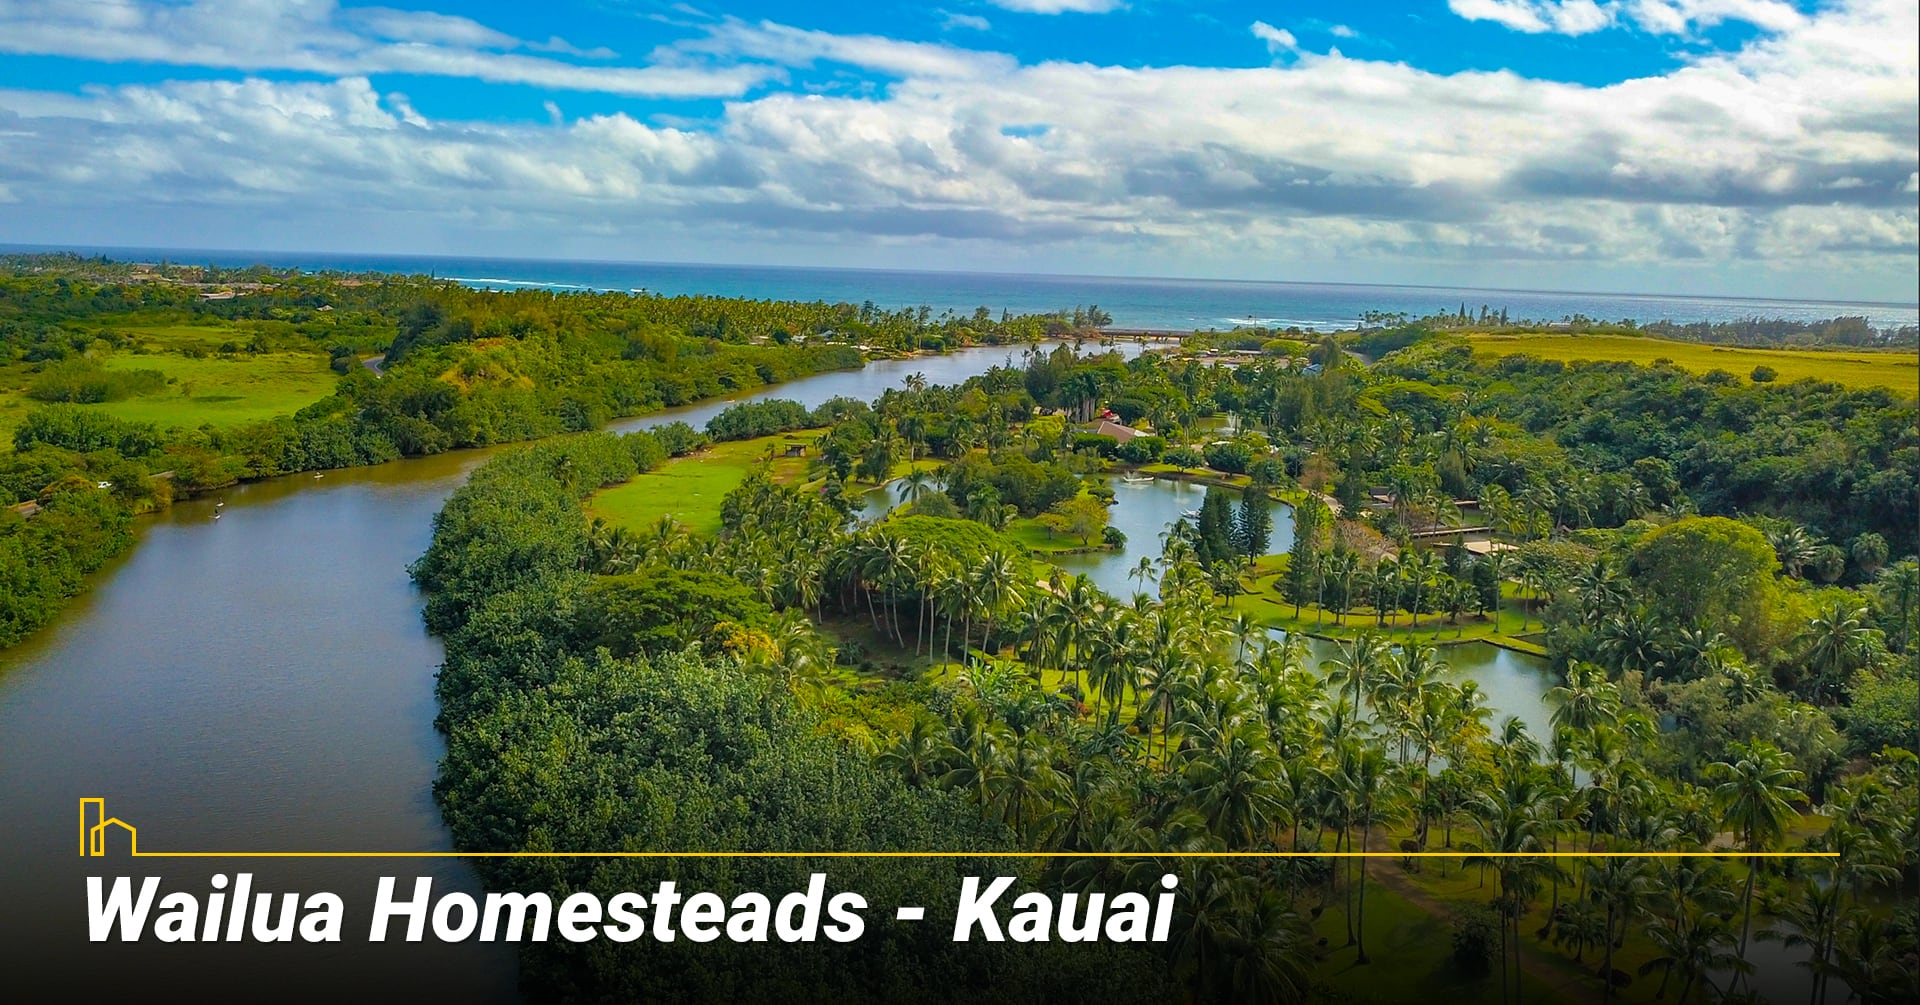 Wailua Homesteads - Kauai